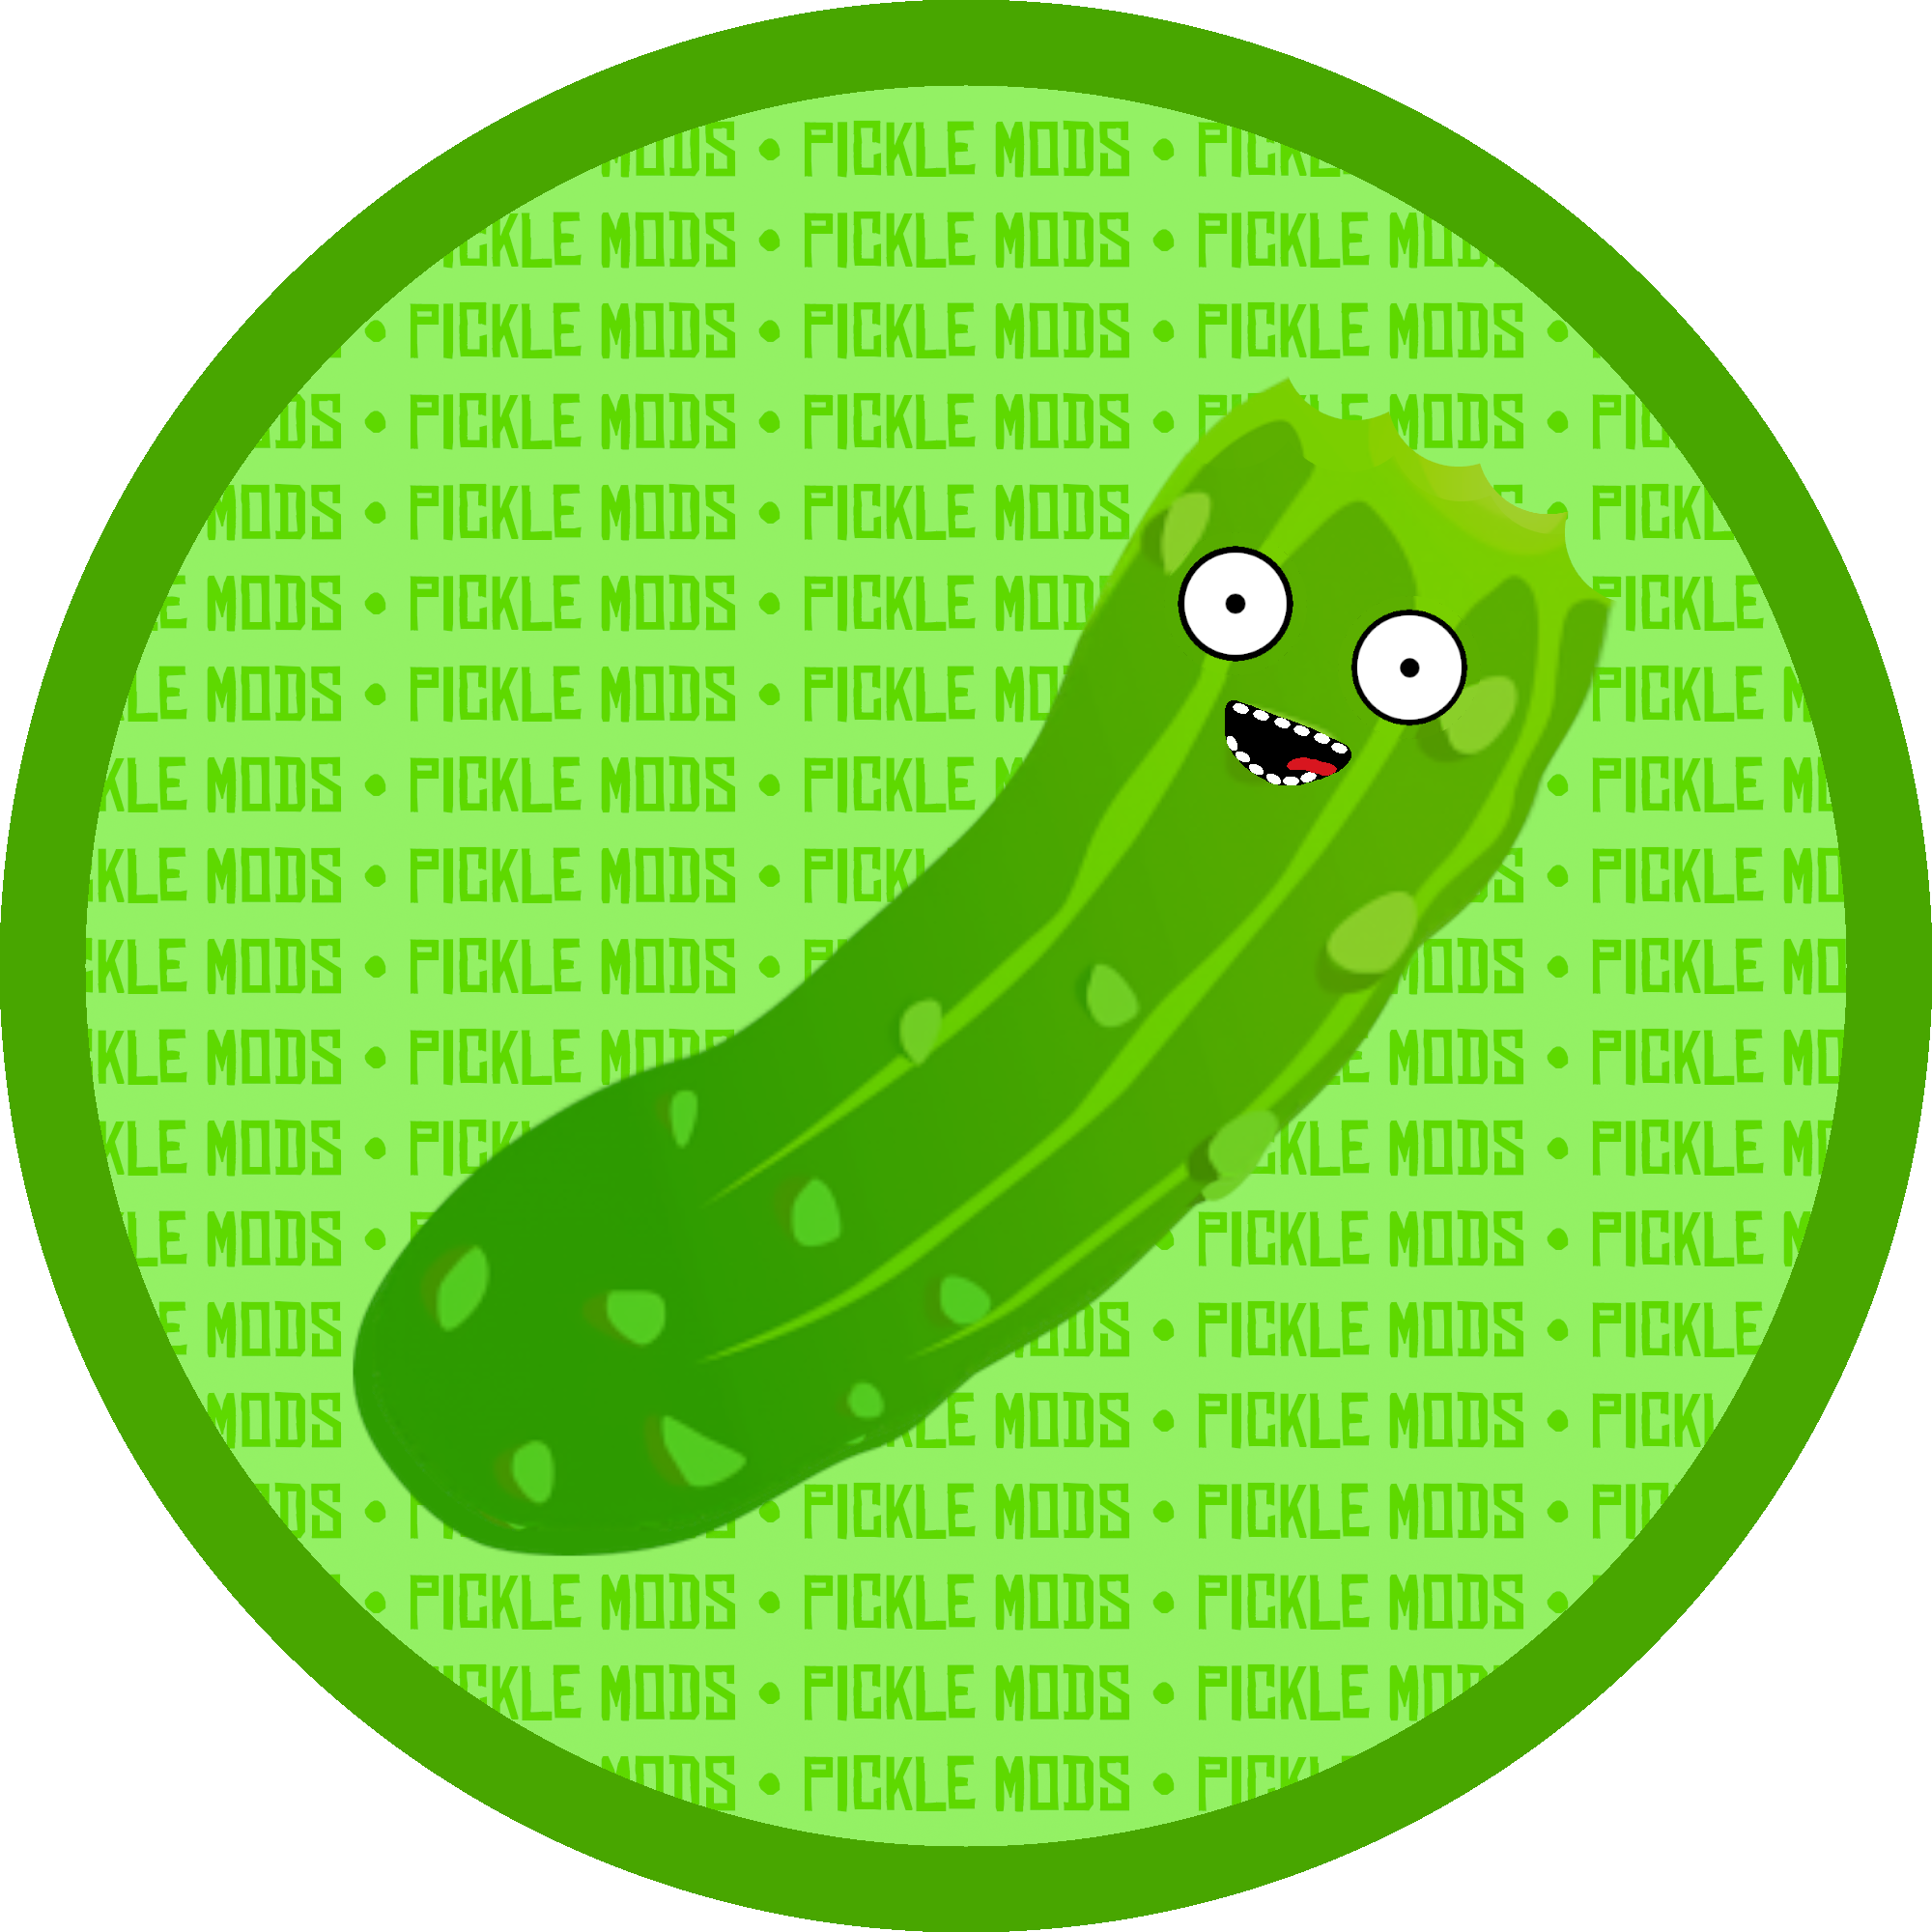 Pickle Mods